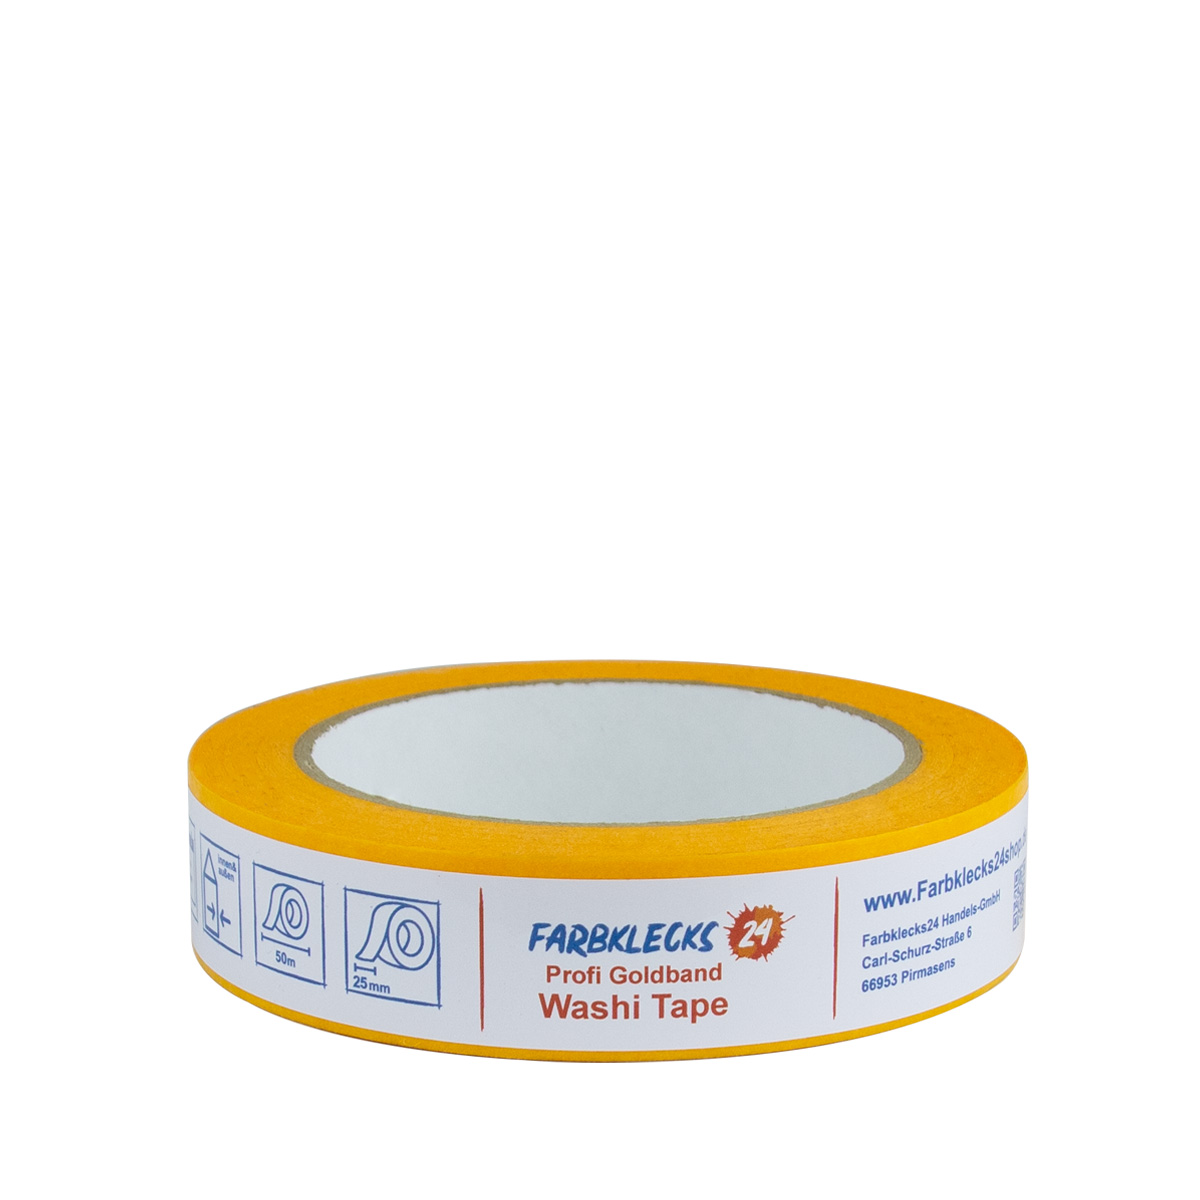 Farbklecks24 Profi Goldband Washi Tape 50m UV60 25mm